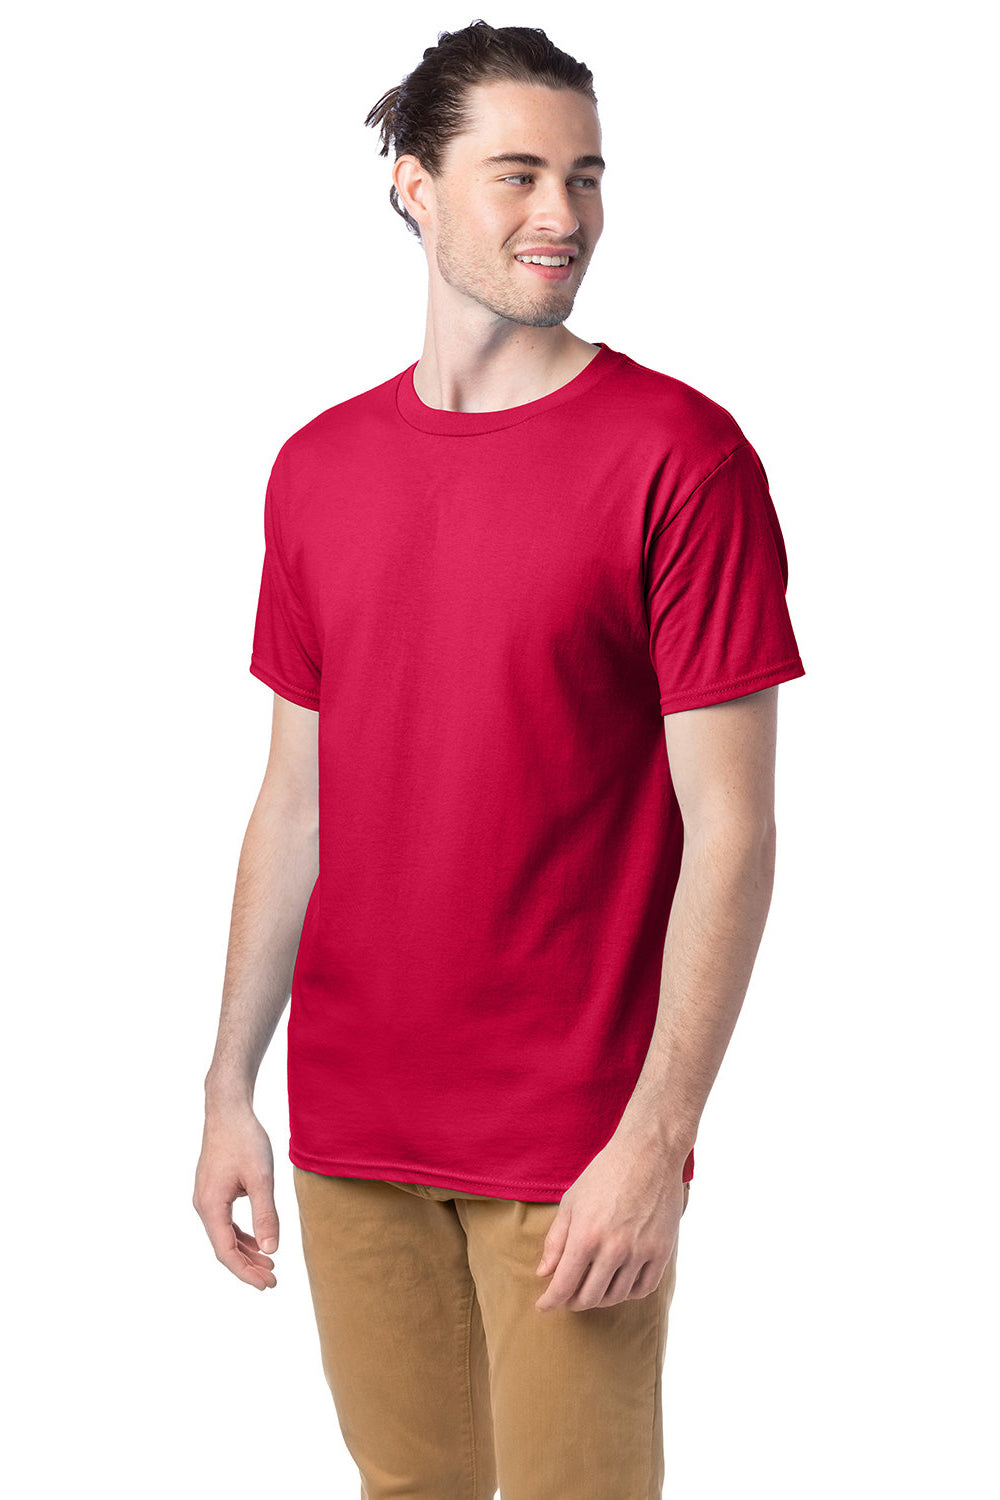 Hanes 5280 Mens ComfortSoft Short Sleeve Crewneck T-Shirt Athletic Crimson Red 3Q